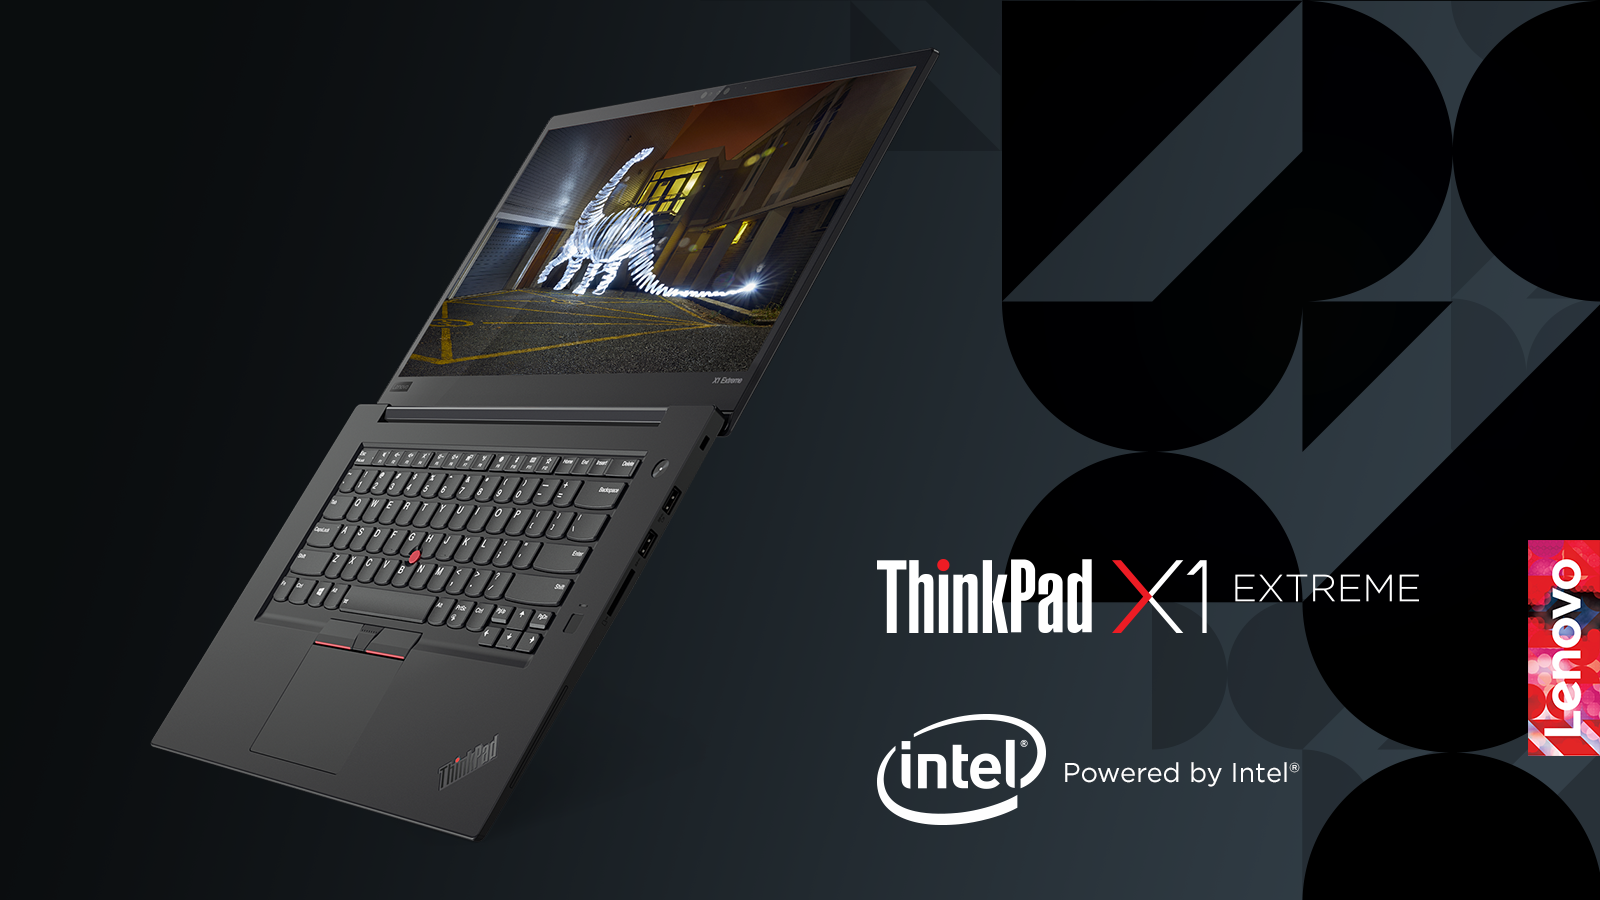 The ThinkPad X1 Extreme